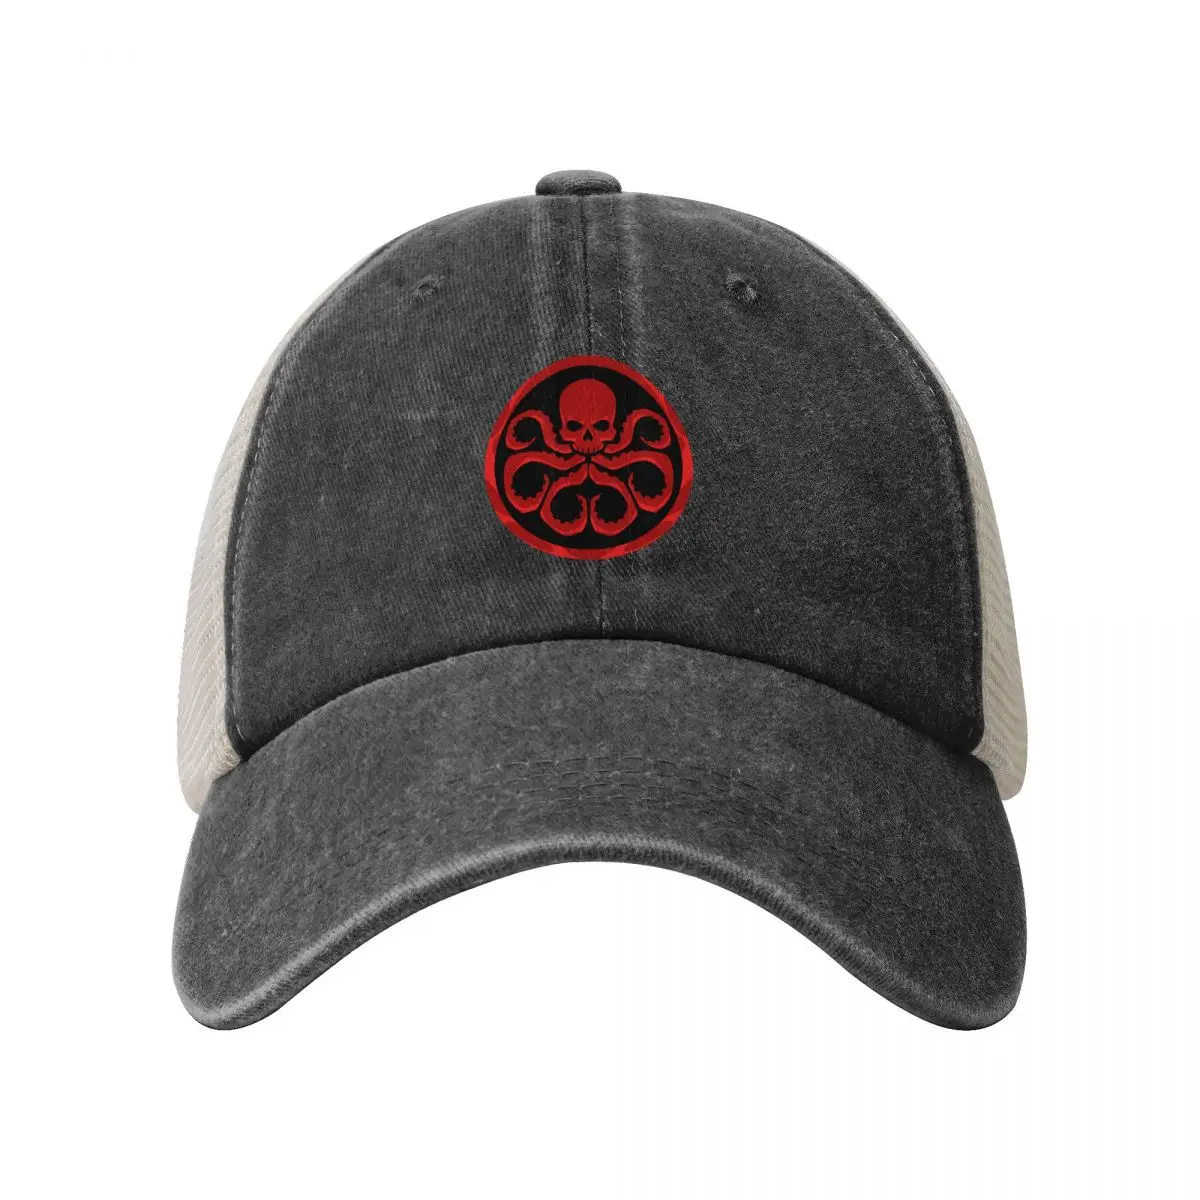 Hail Hydra Cowboy Mesh Baseball Cap Hat Man For The Sun Streetwear|-F-| Kapelusze przeciwsłoneczne Kobieta Męska